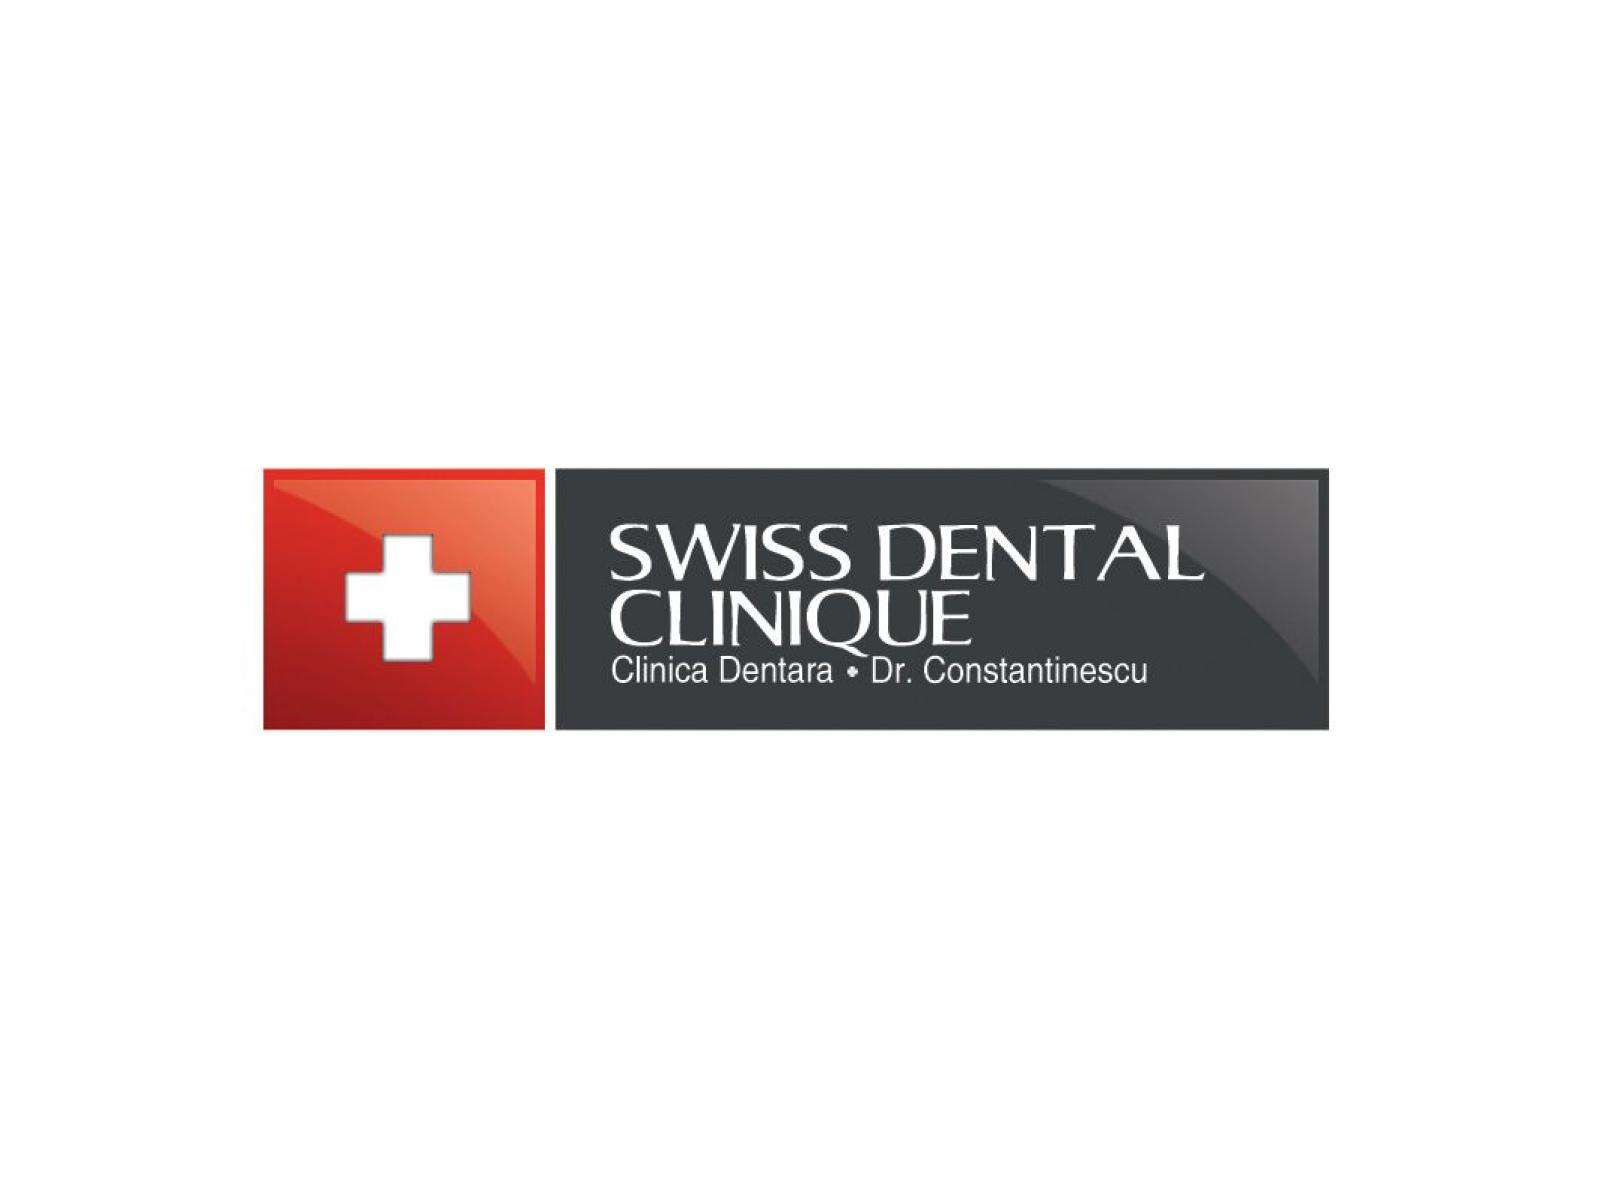 Swiss Dental Clinique - Logo_-_Mihai_constantinescu_-_RGB.jpg